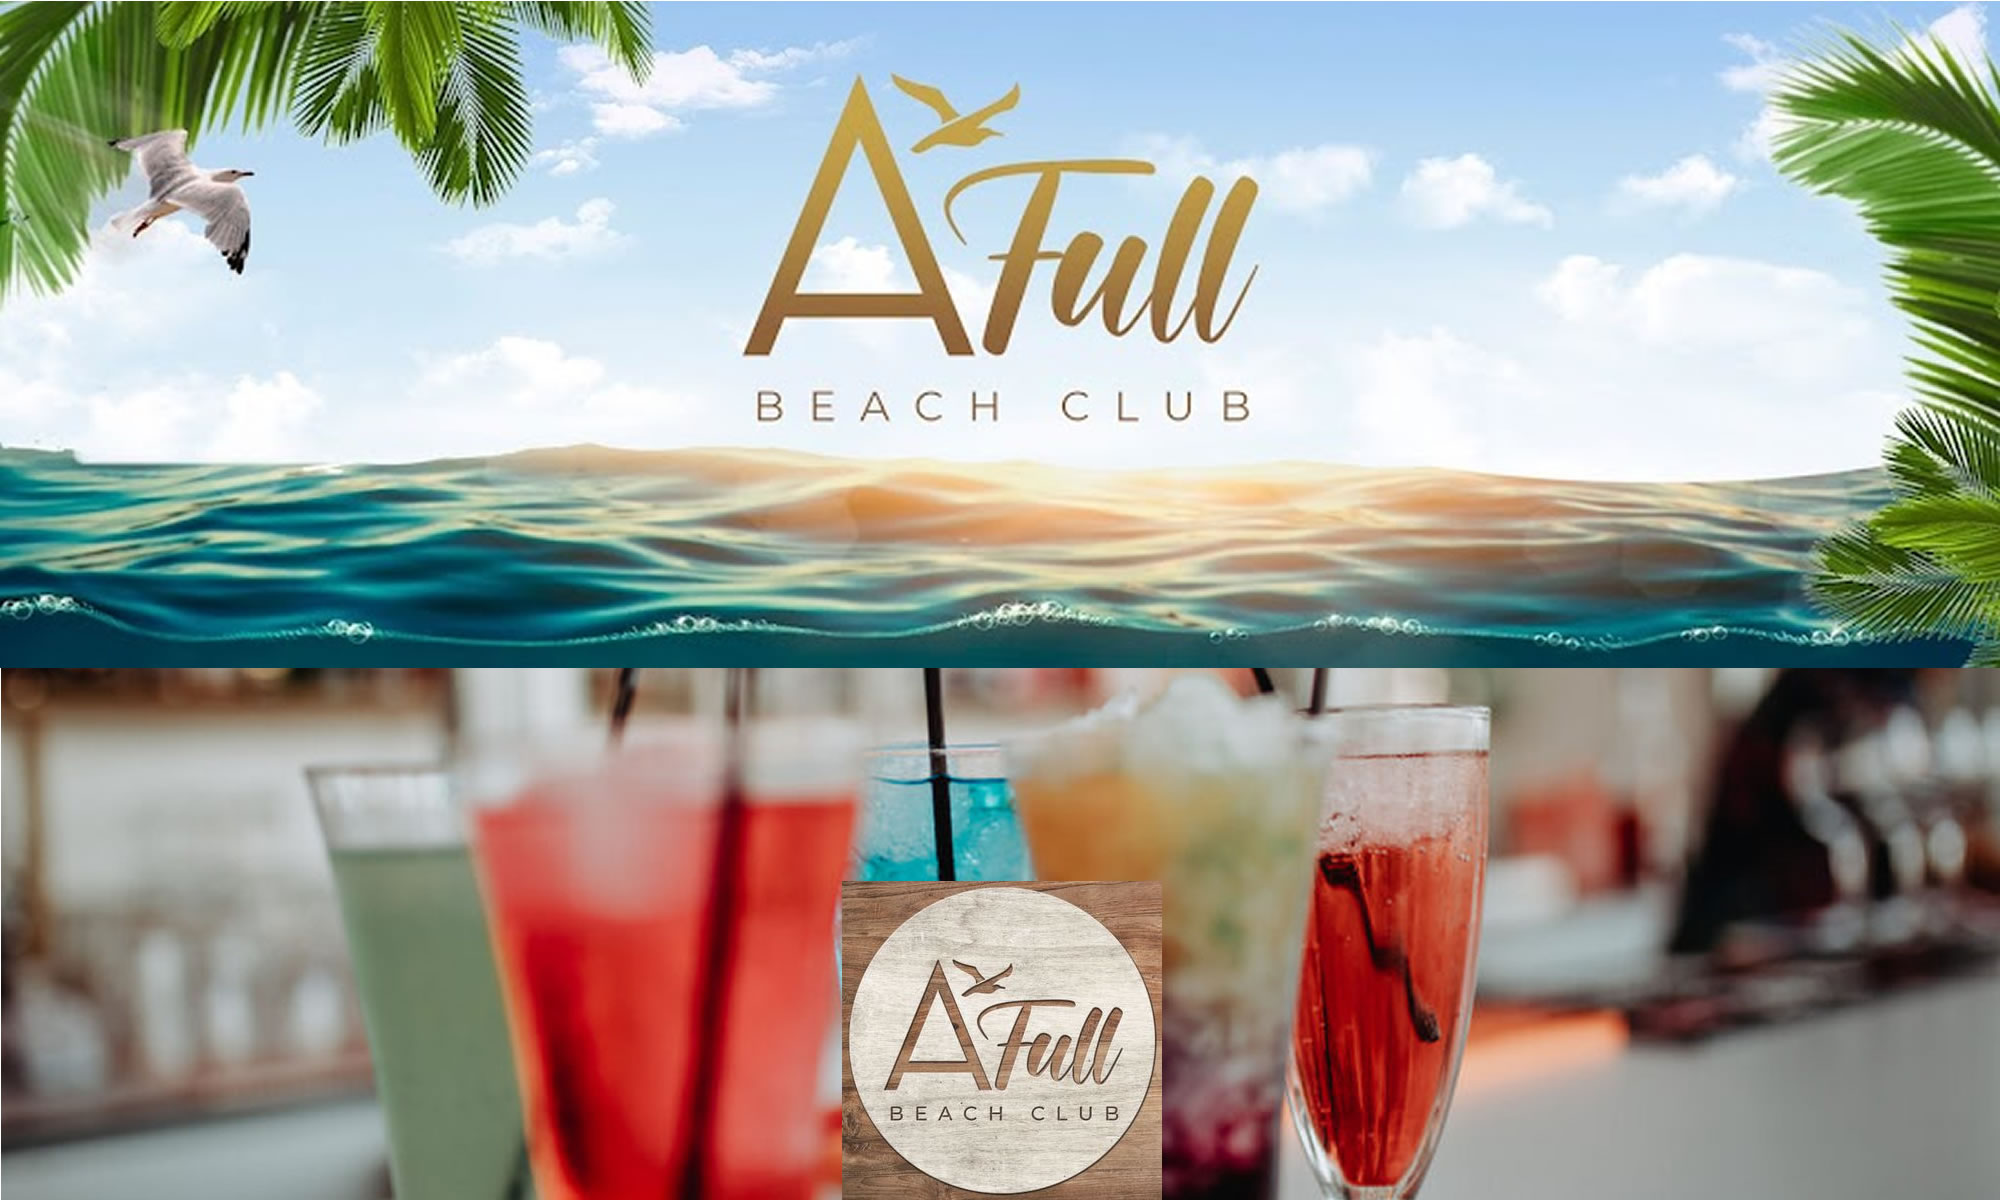 AFULL BEACH CLUB